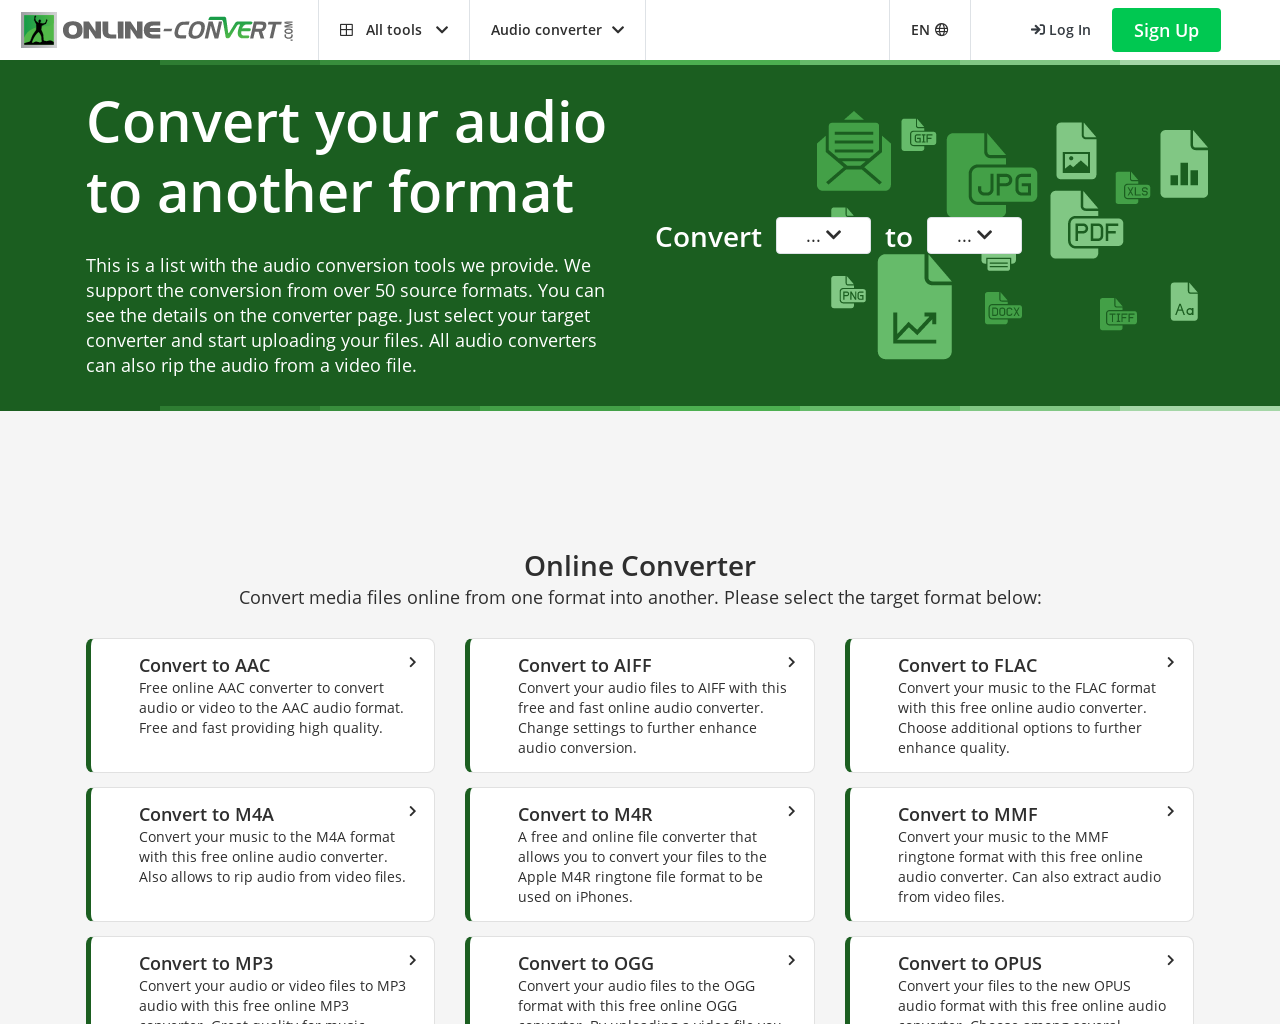 audio.online-convert.com